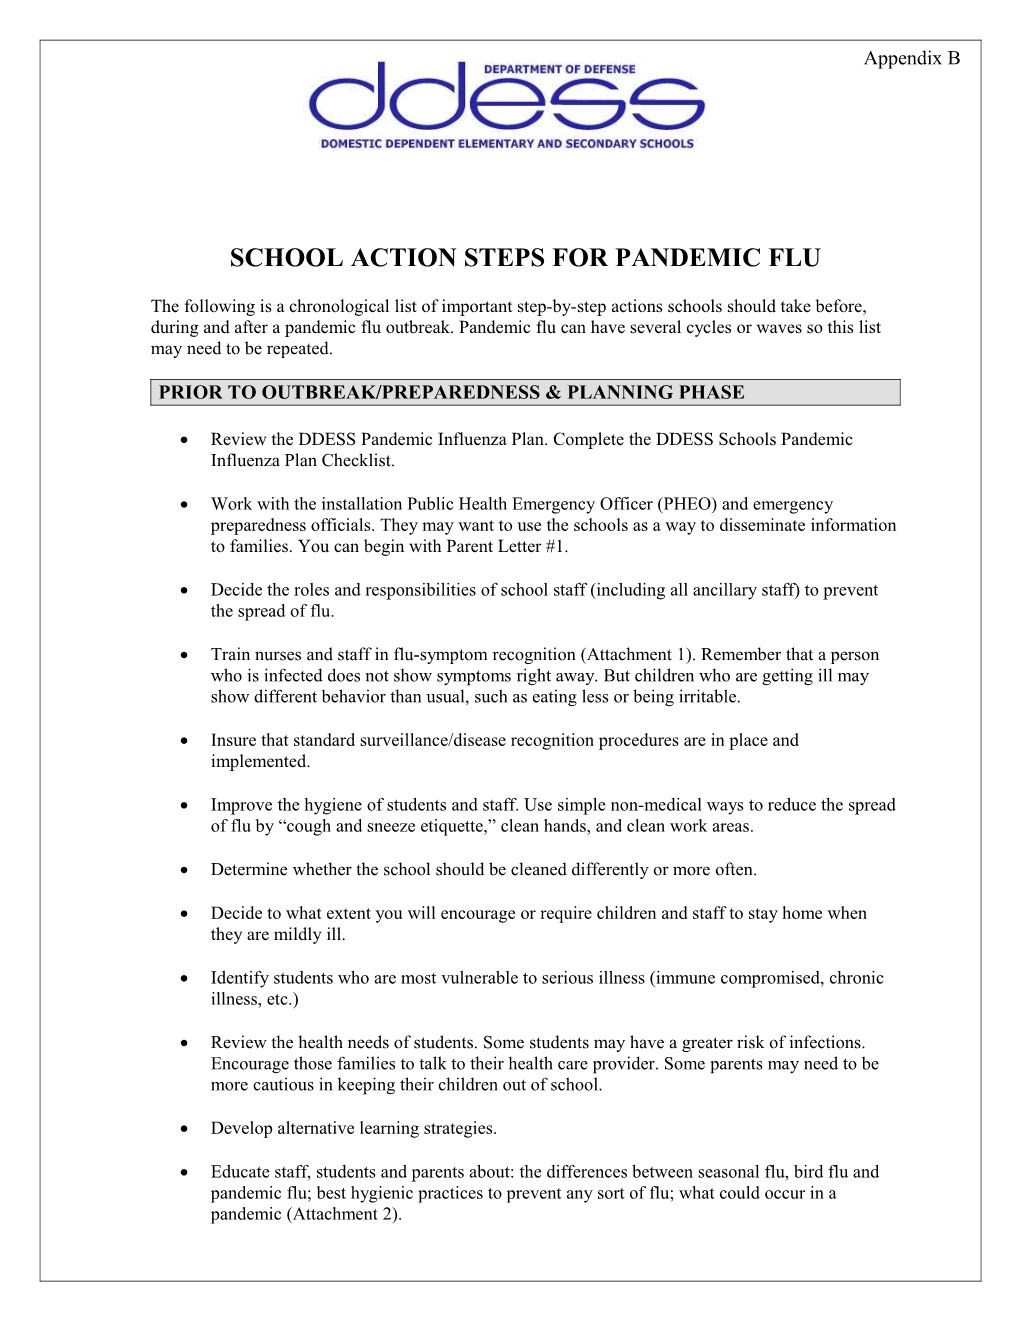 School Action Steps for Pandemic Flu